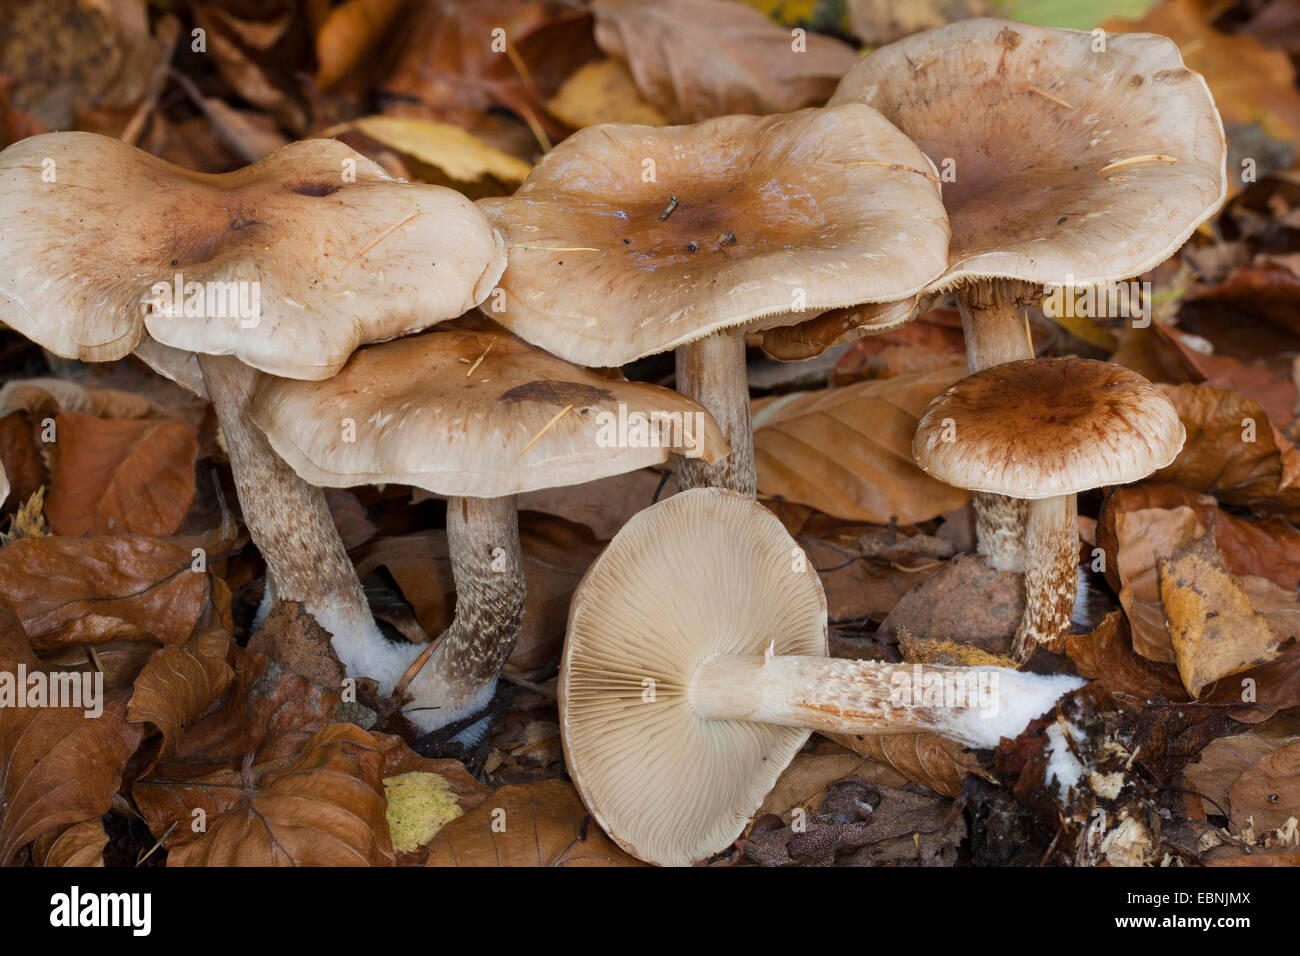 Slimy Scalycap (Pholiota lenta, Flammula lenta), fruiting bodies on forest floor, Germany Stock Photo